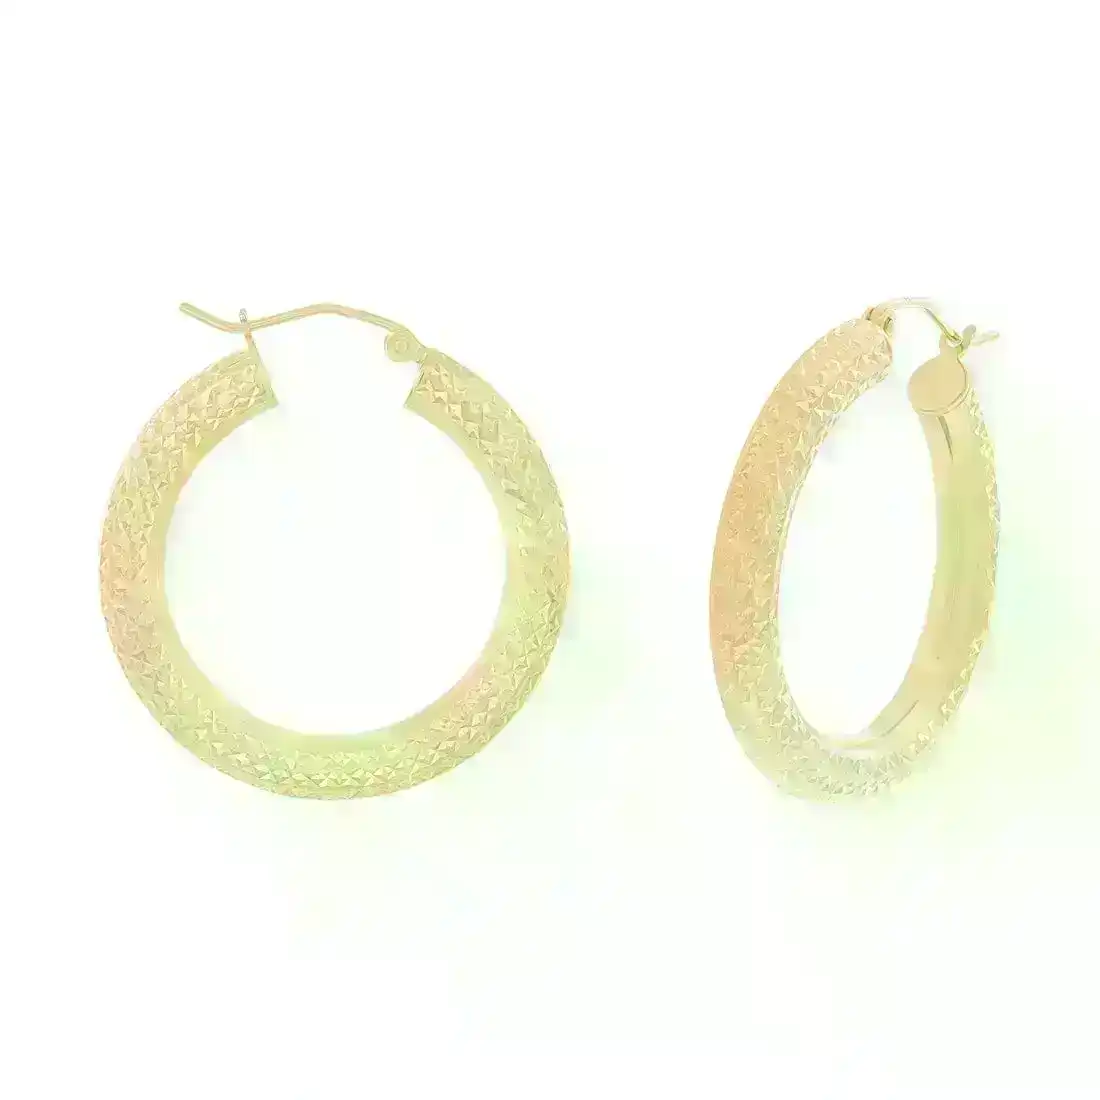 9ct Yellow Gold Silver Infused Diamond Cut Hoop Earrings 40mm